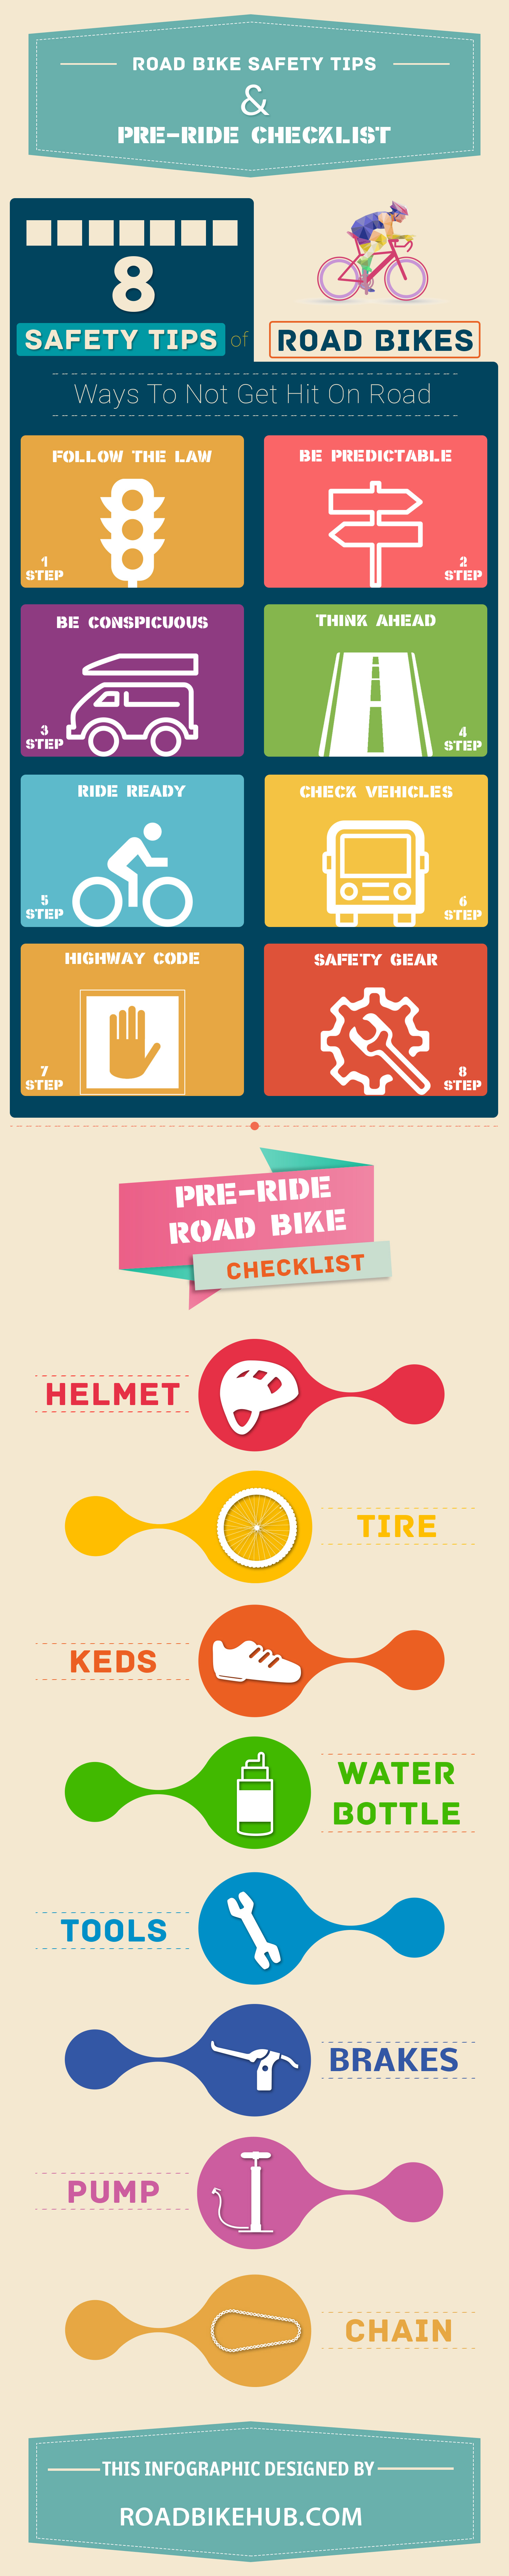 road bike safety tips